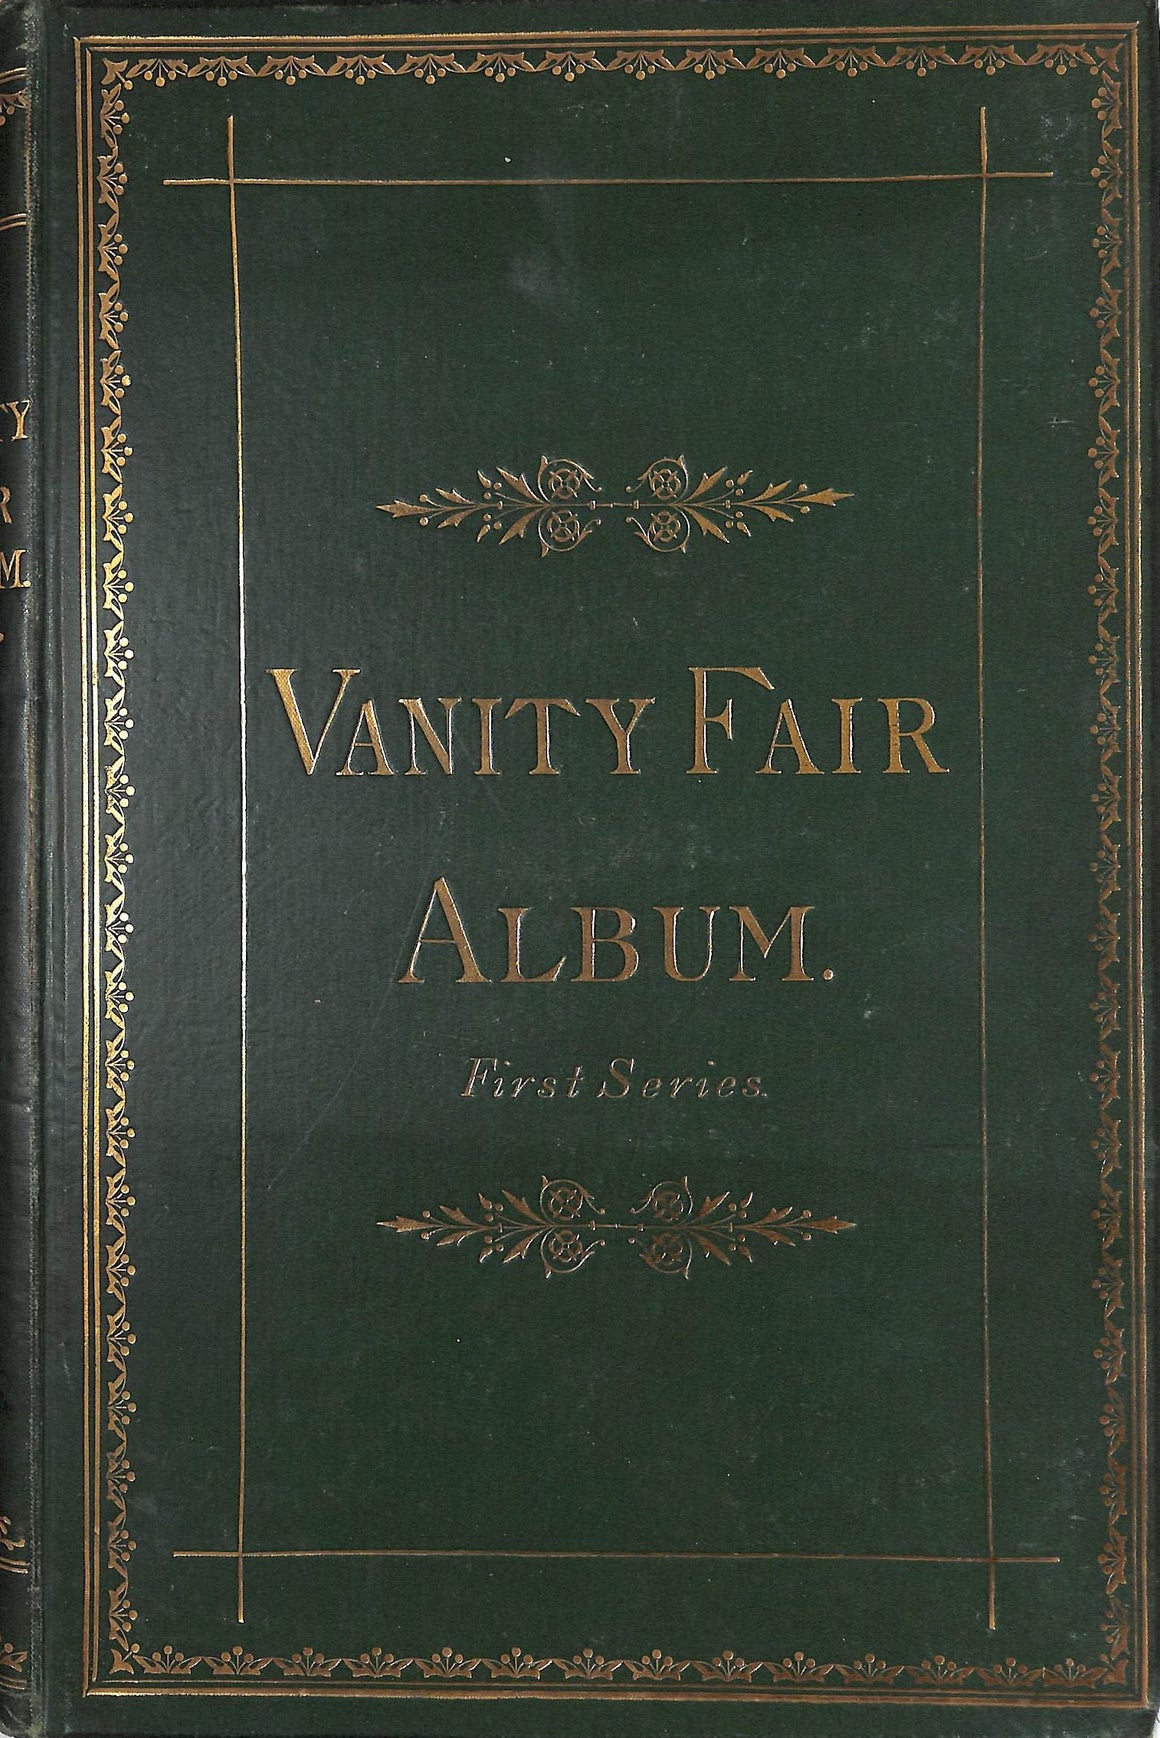 "Vanity Fair Album. First Series." 1869